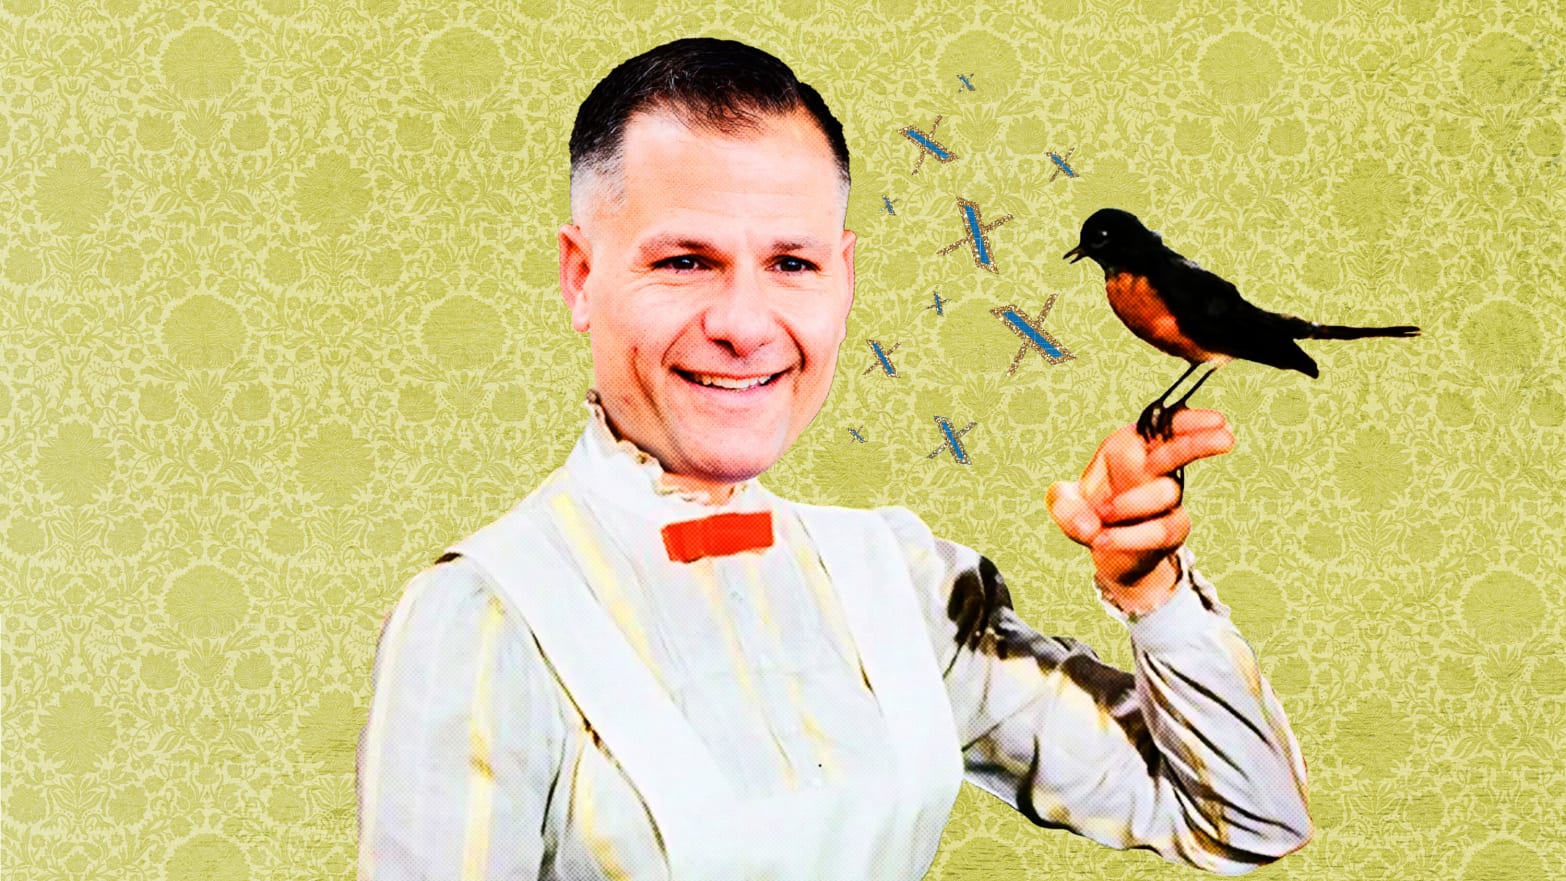 Photo illustration o Marc Molinaro's head on Mary Poppins' body holding a bird tweeting X symbols